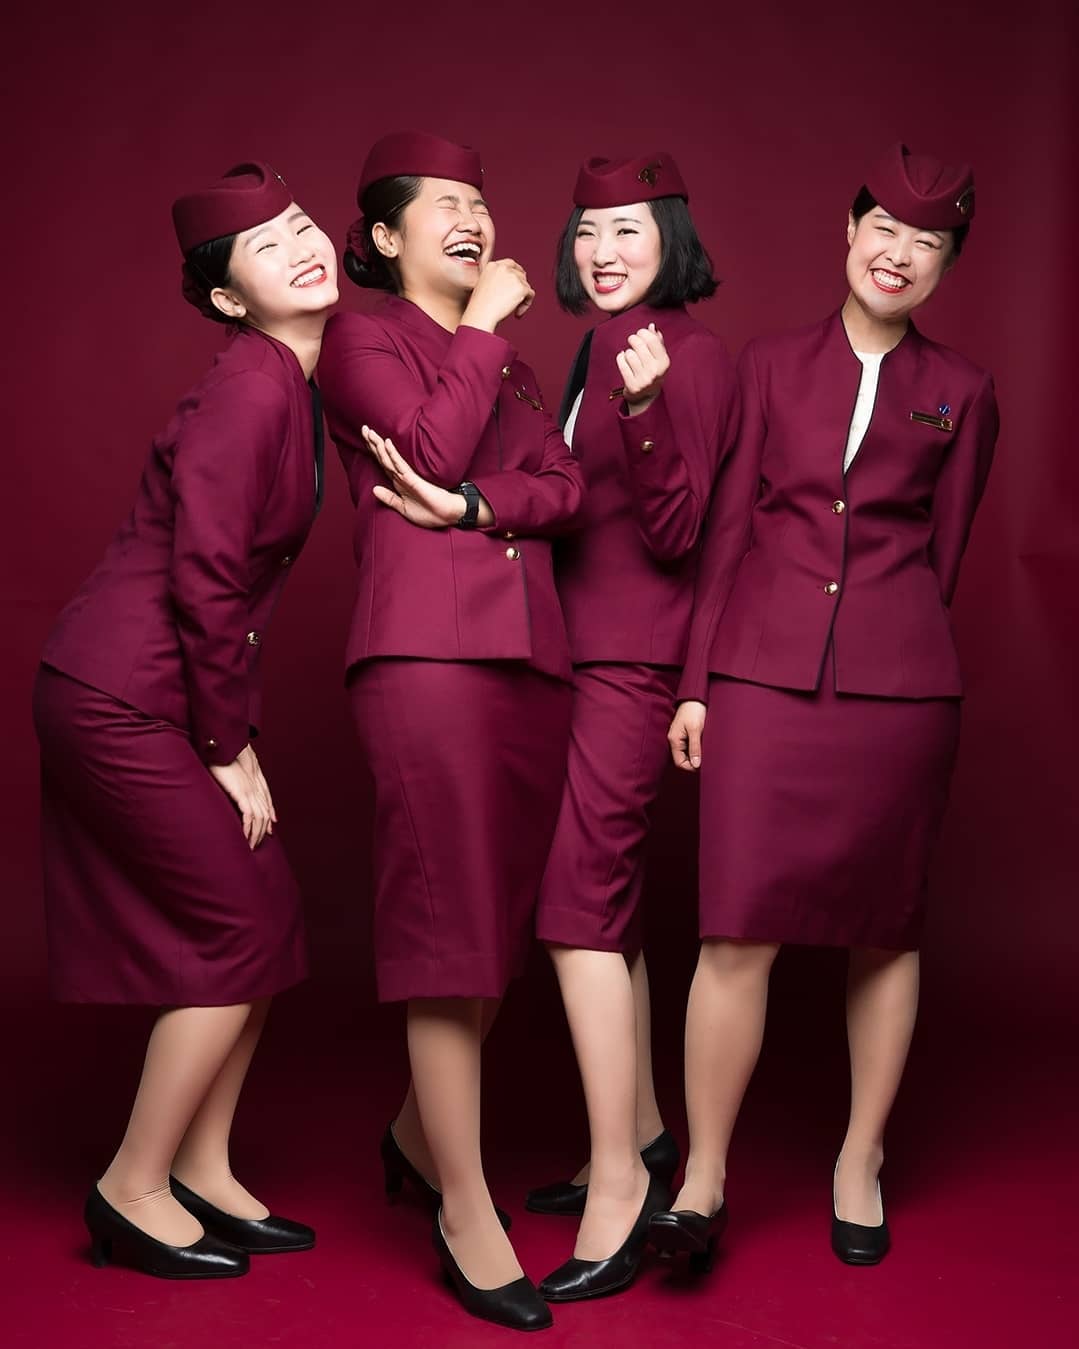 Qatar Airways Cabin Crew Uniform What Is It Like Photos - roblox flight attendant uniform